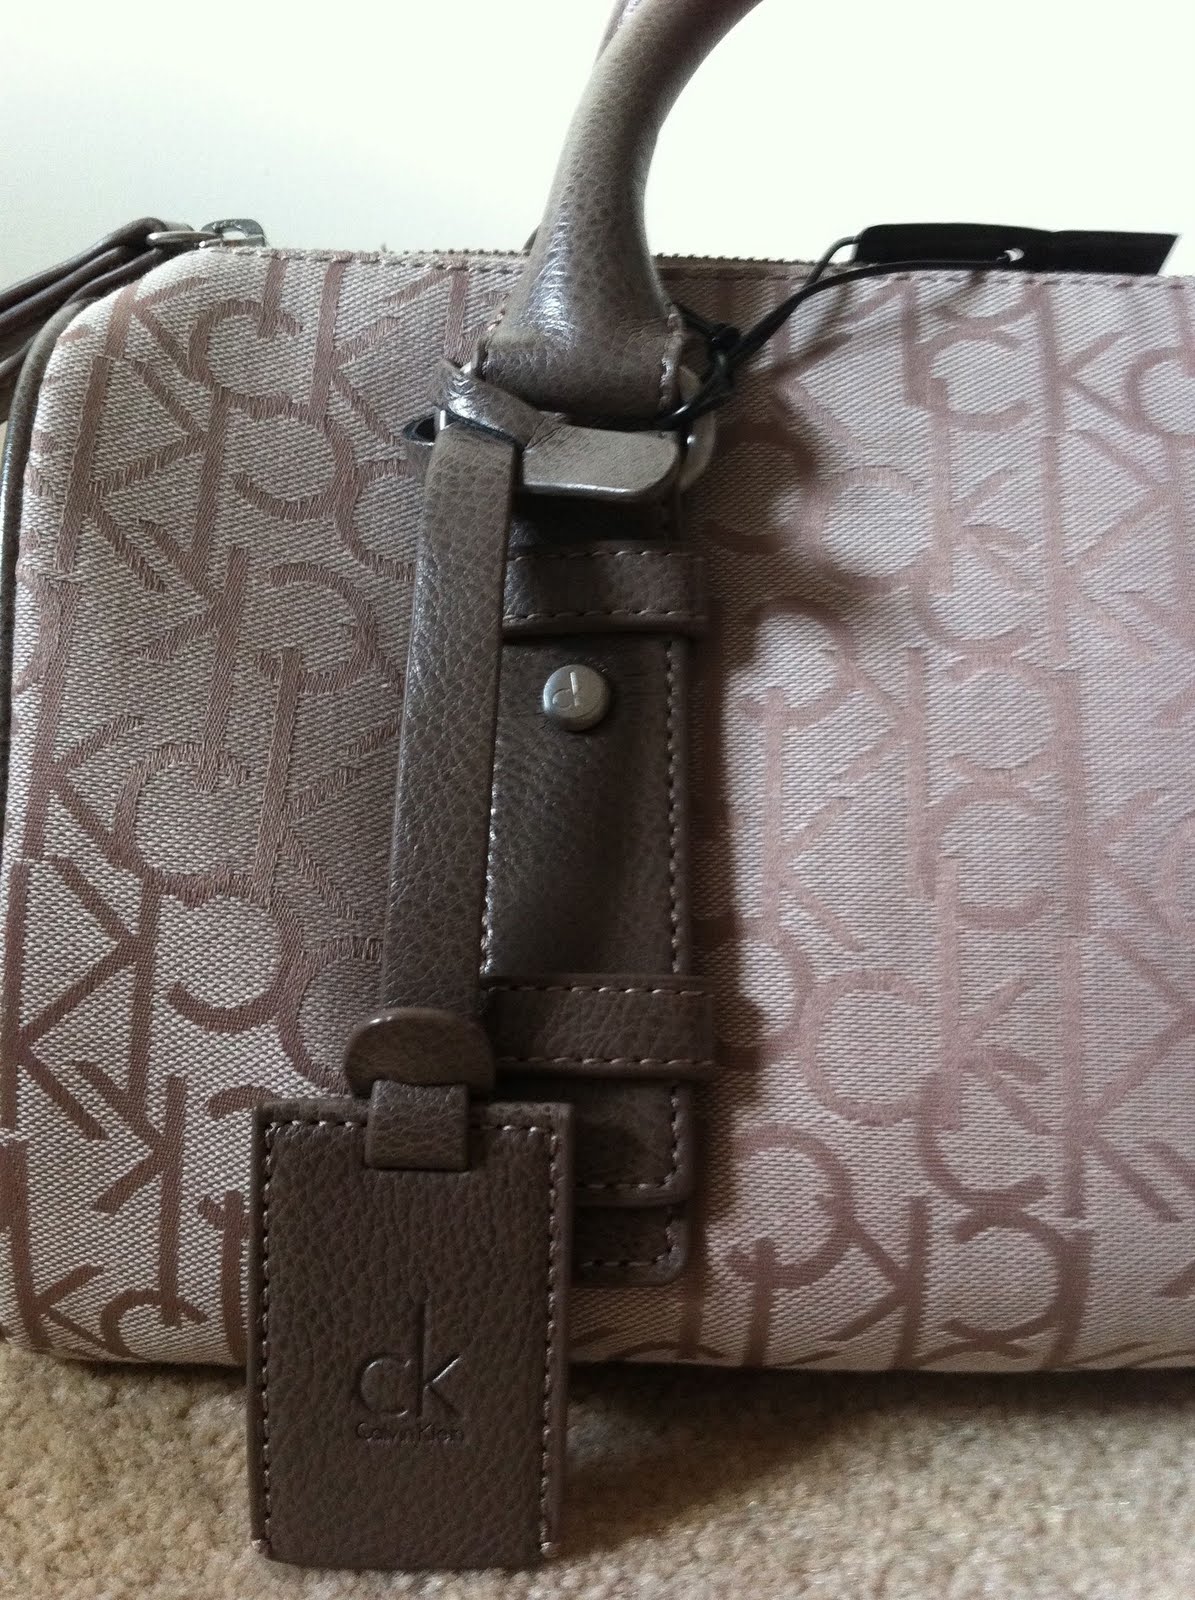 Discounted Genuine Handbags: (SOLD) Calvin Klein Handbag For Sale